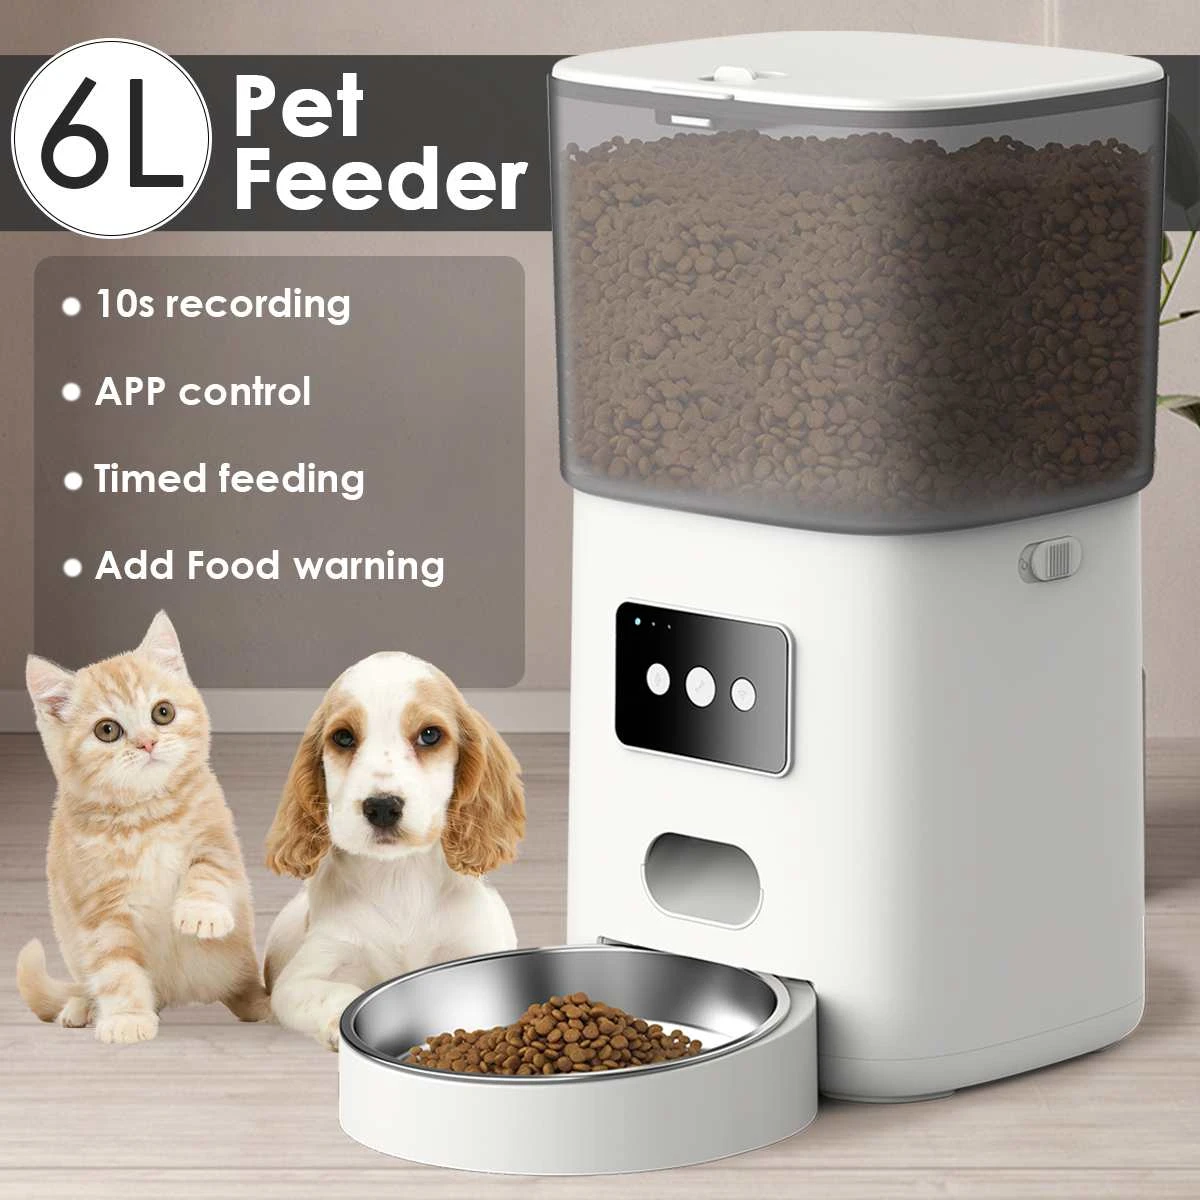 https://ae01.alicdn.com/kf/S6bd27855e92e43a39b394d2d1cbd7a56y/6L-Large-Capacity-Pet-Automatic-Feeder-Cat-And-Dog-Food-Dispenser-APP-Control-Timer-Feeding-Wifi.jpg_Q90.jpg_.webp